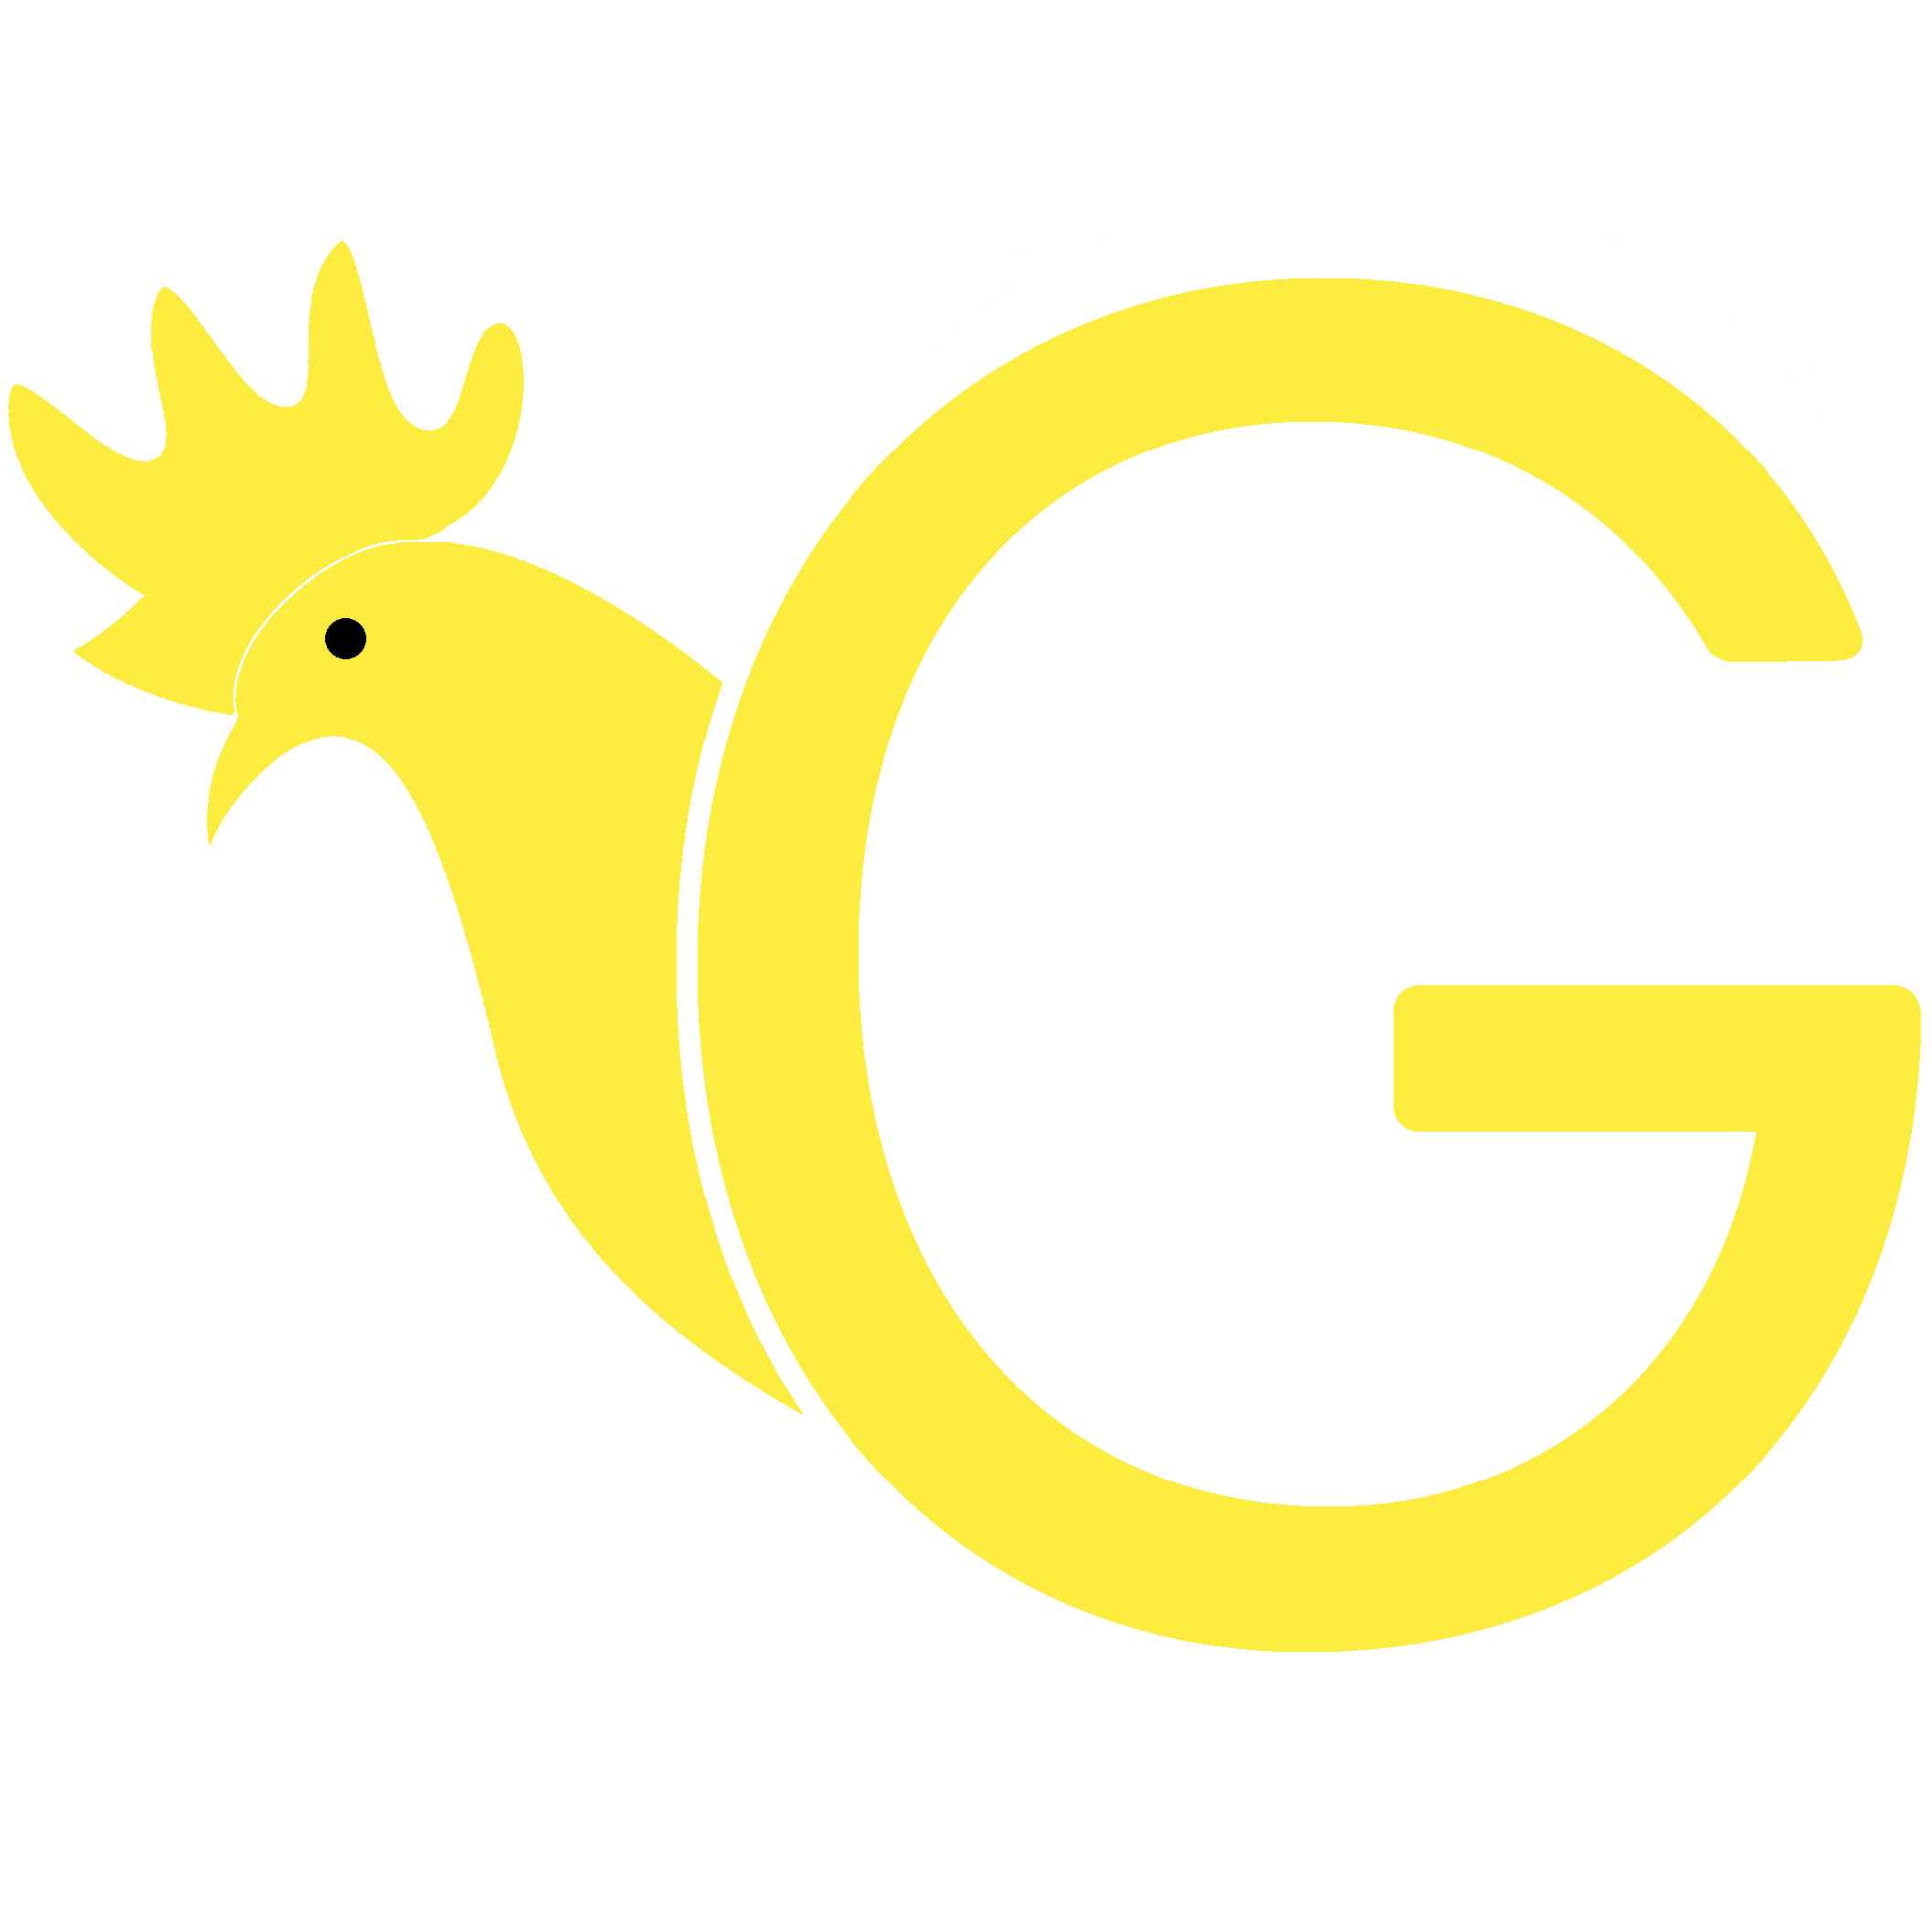 Logo - Your community name